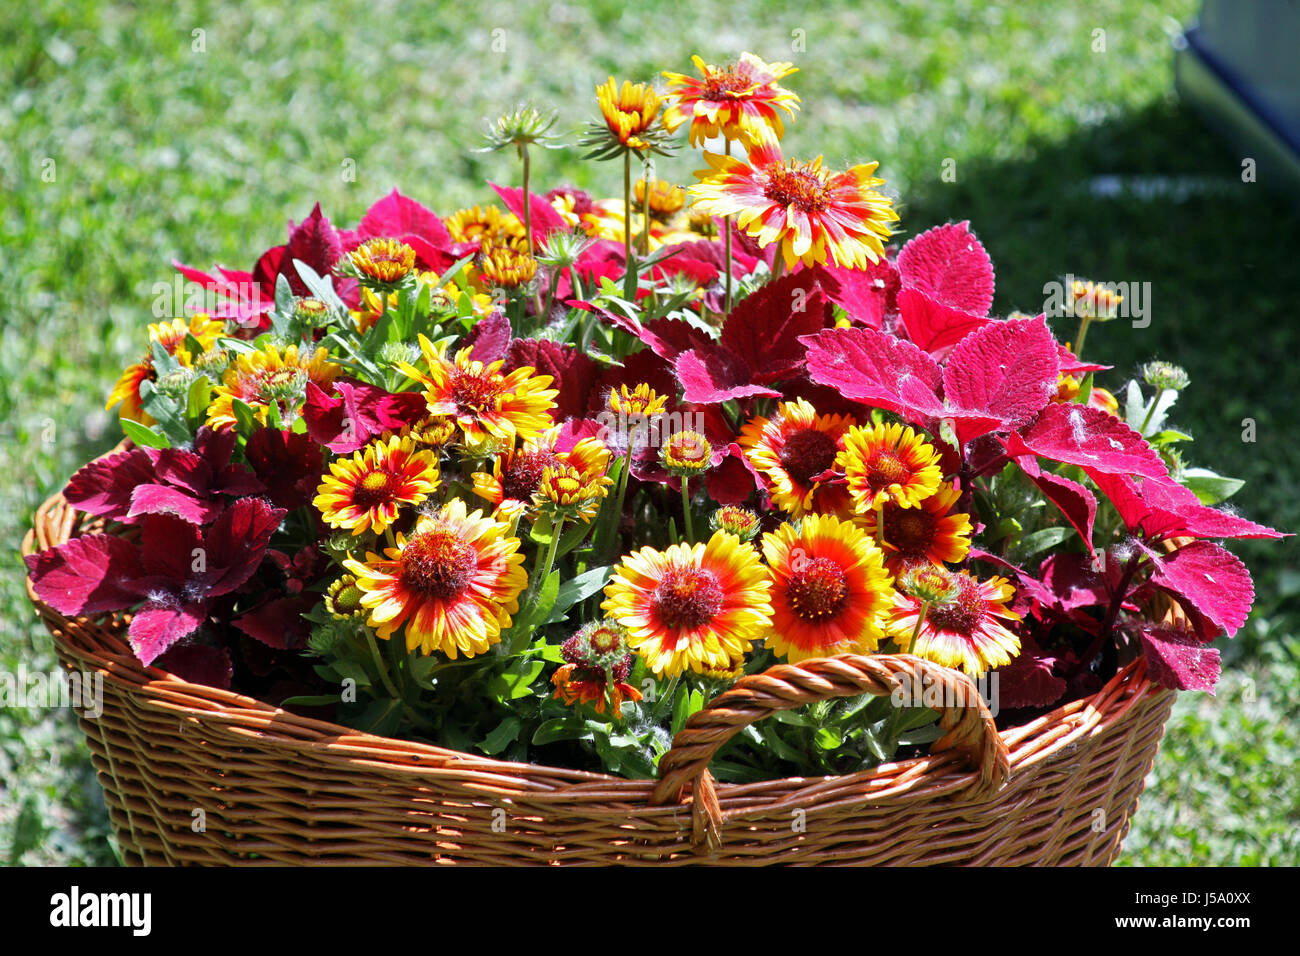 Flowers,plants,gardening and arrangements,spring to summer,Croatia,45 Stock Photo